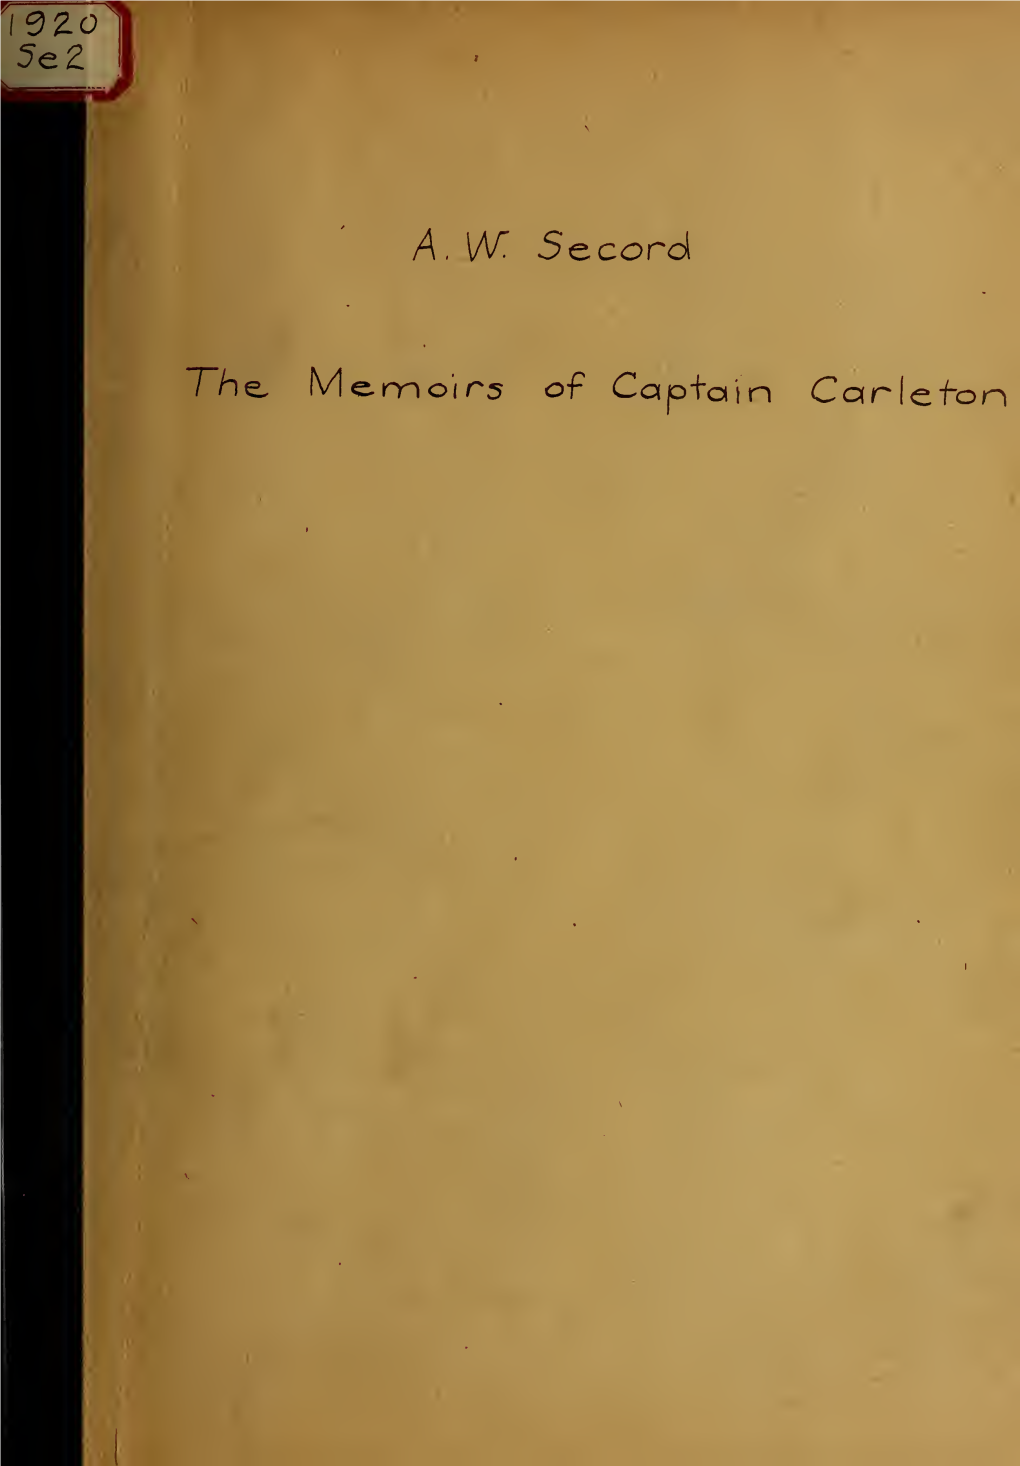 The Memoirs of Captain Carleton